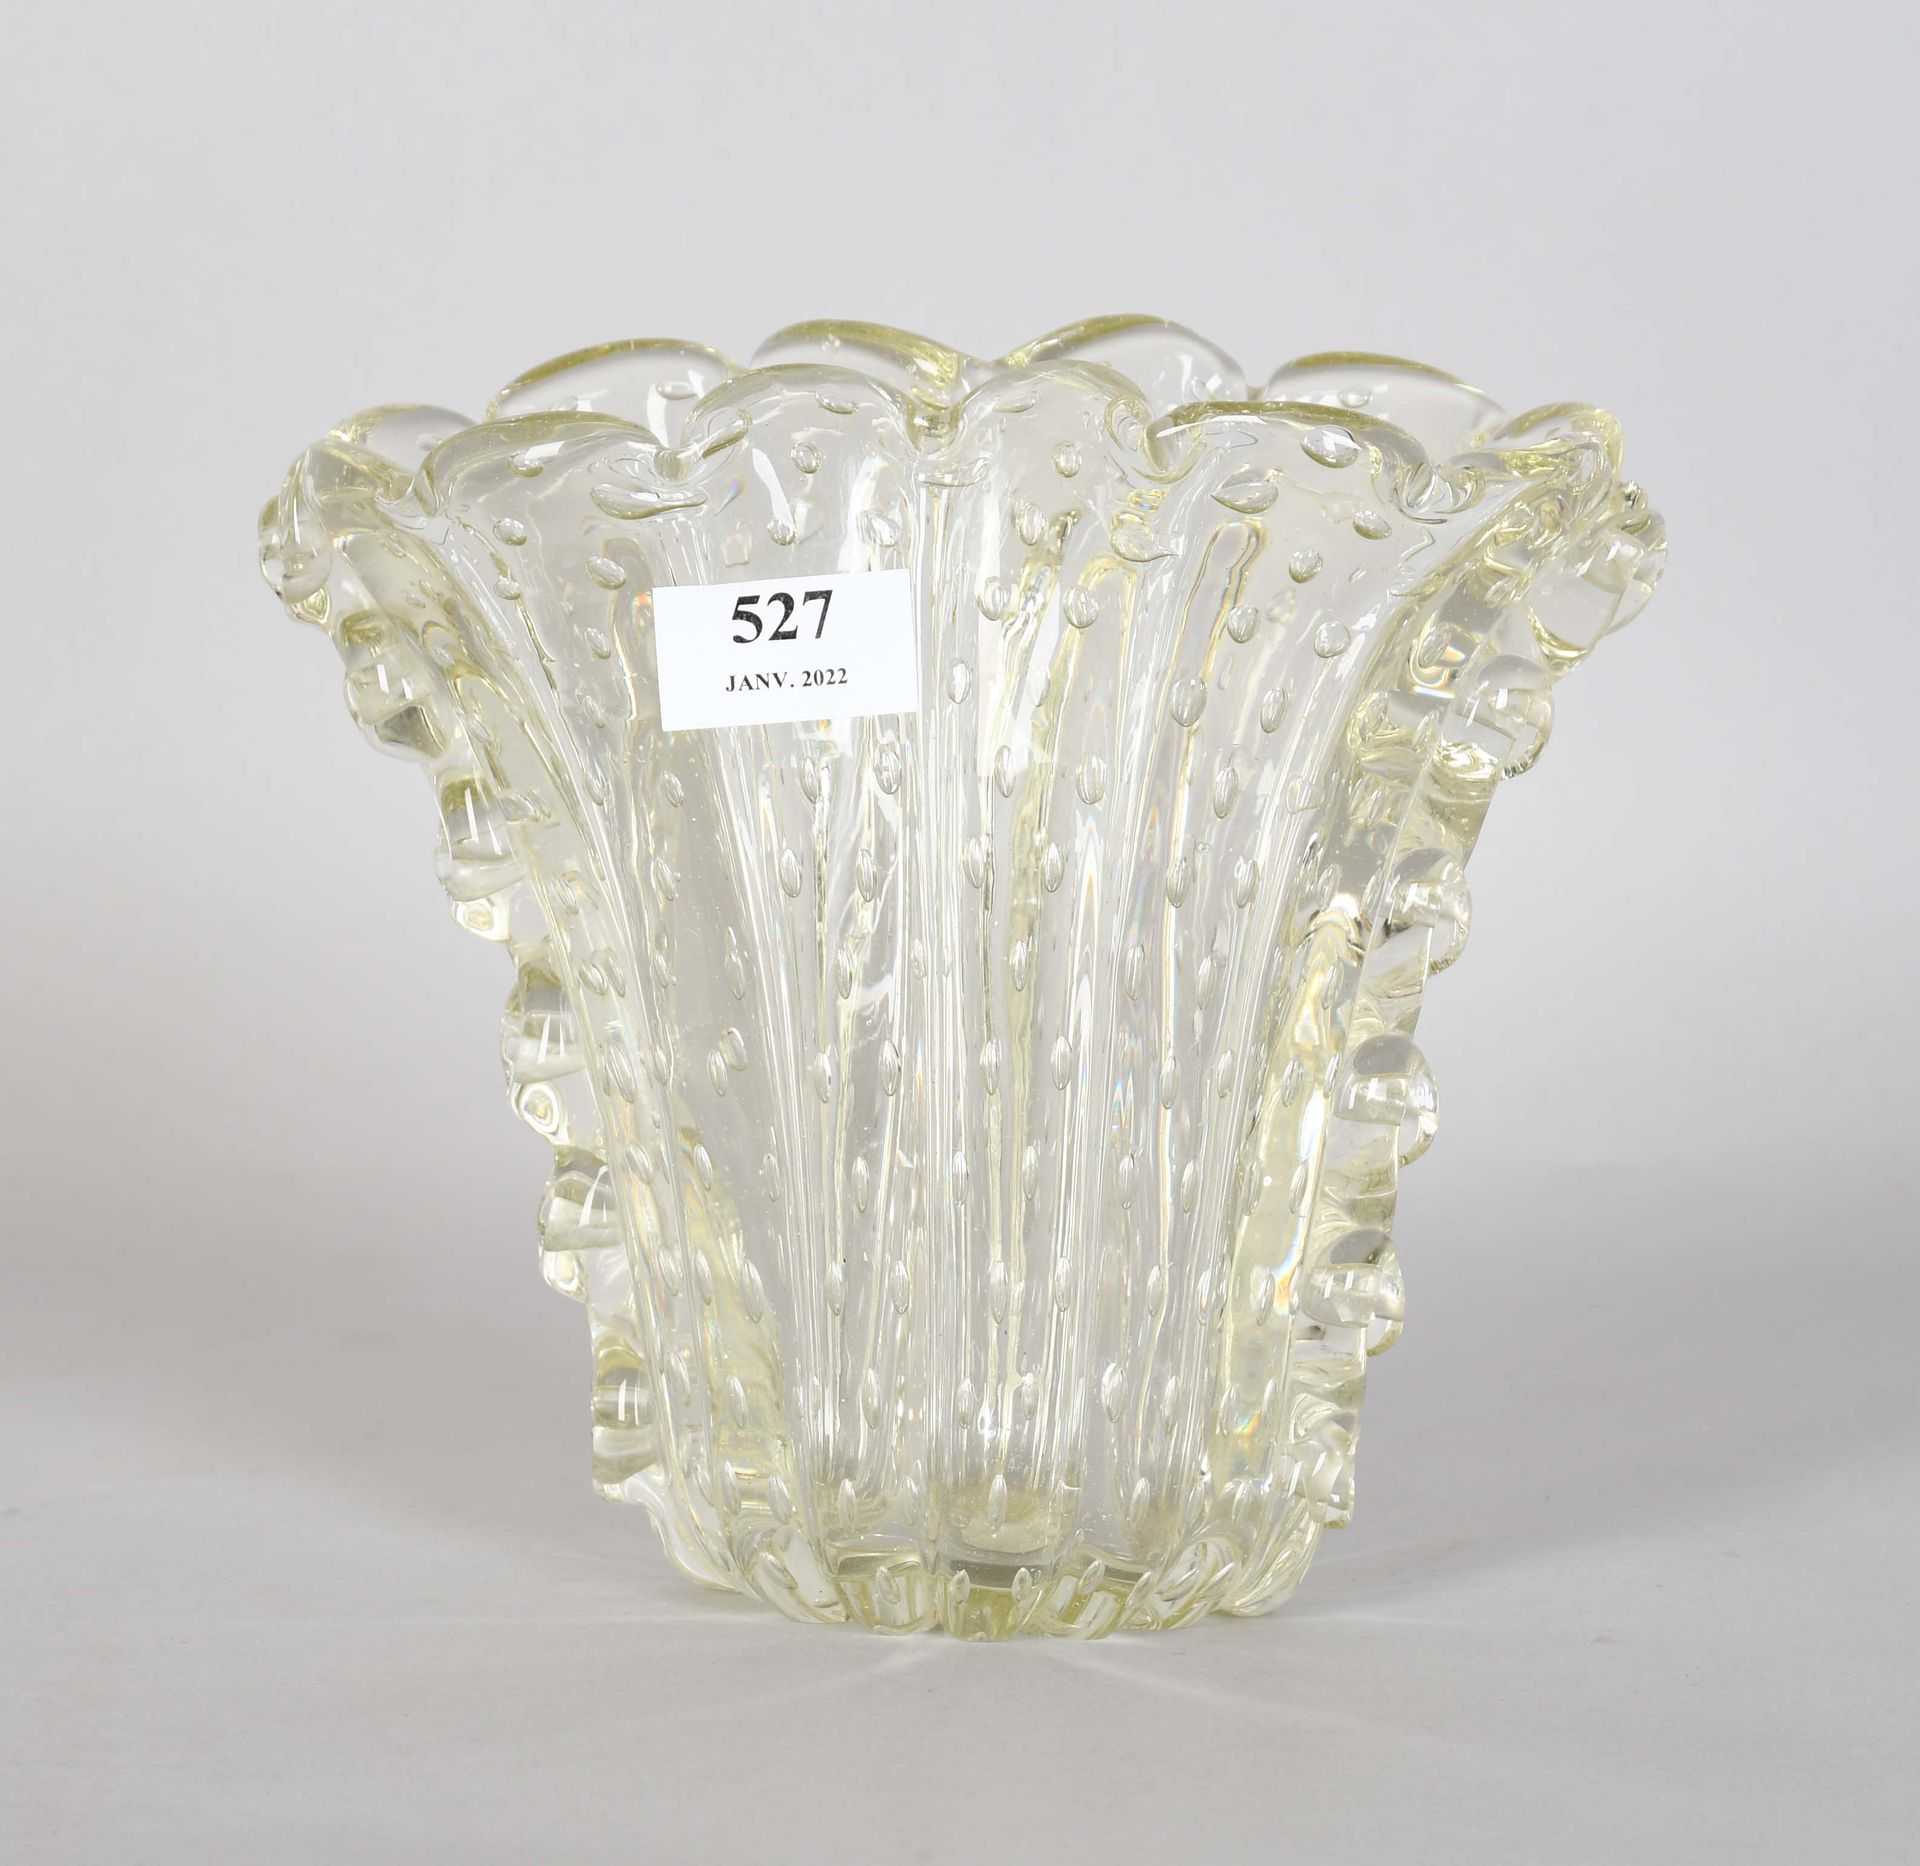 Null 威尼斯风格的泡沫玻璃花瓶

高度：20厘米。